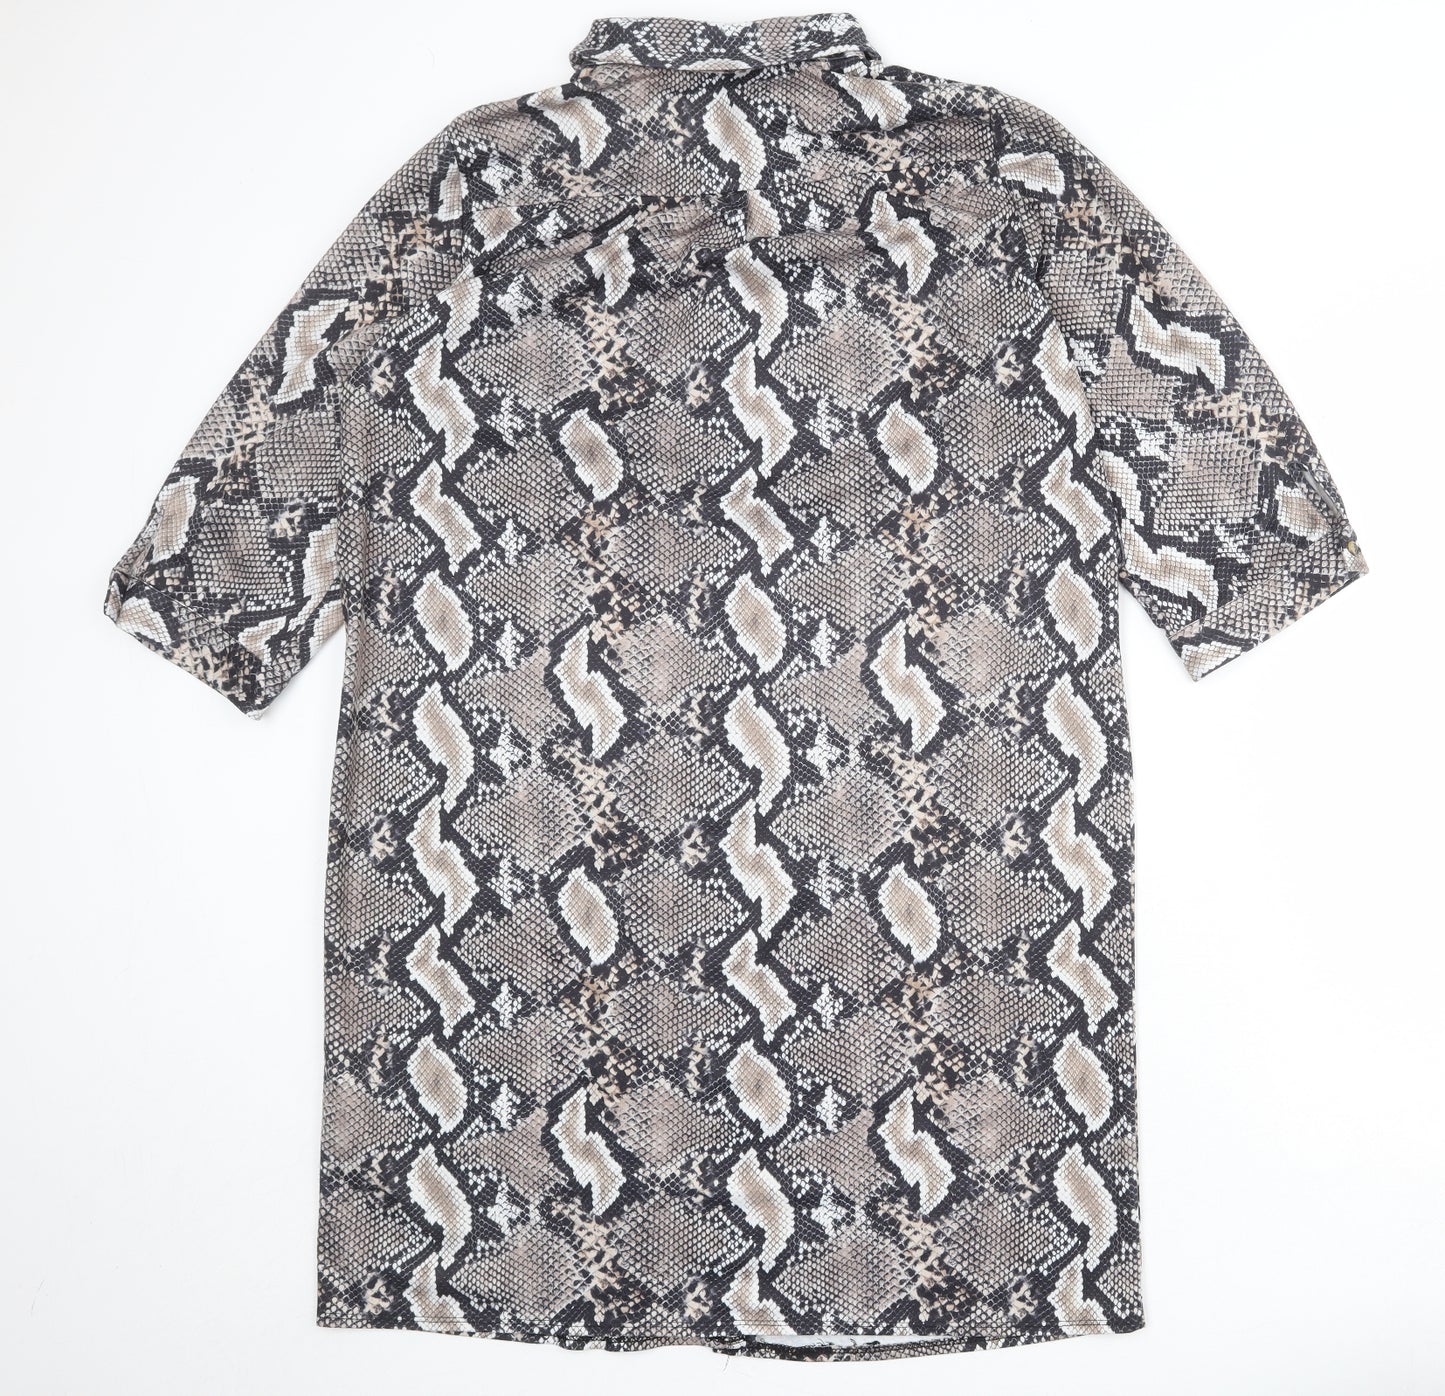 Wallis Womens Multicoloured Animal Print Polyester Shirt Dress Size 16 Collared Button - Snakeskin pattern